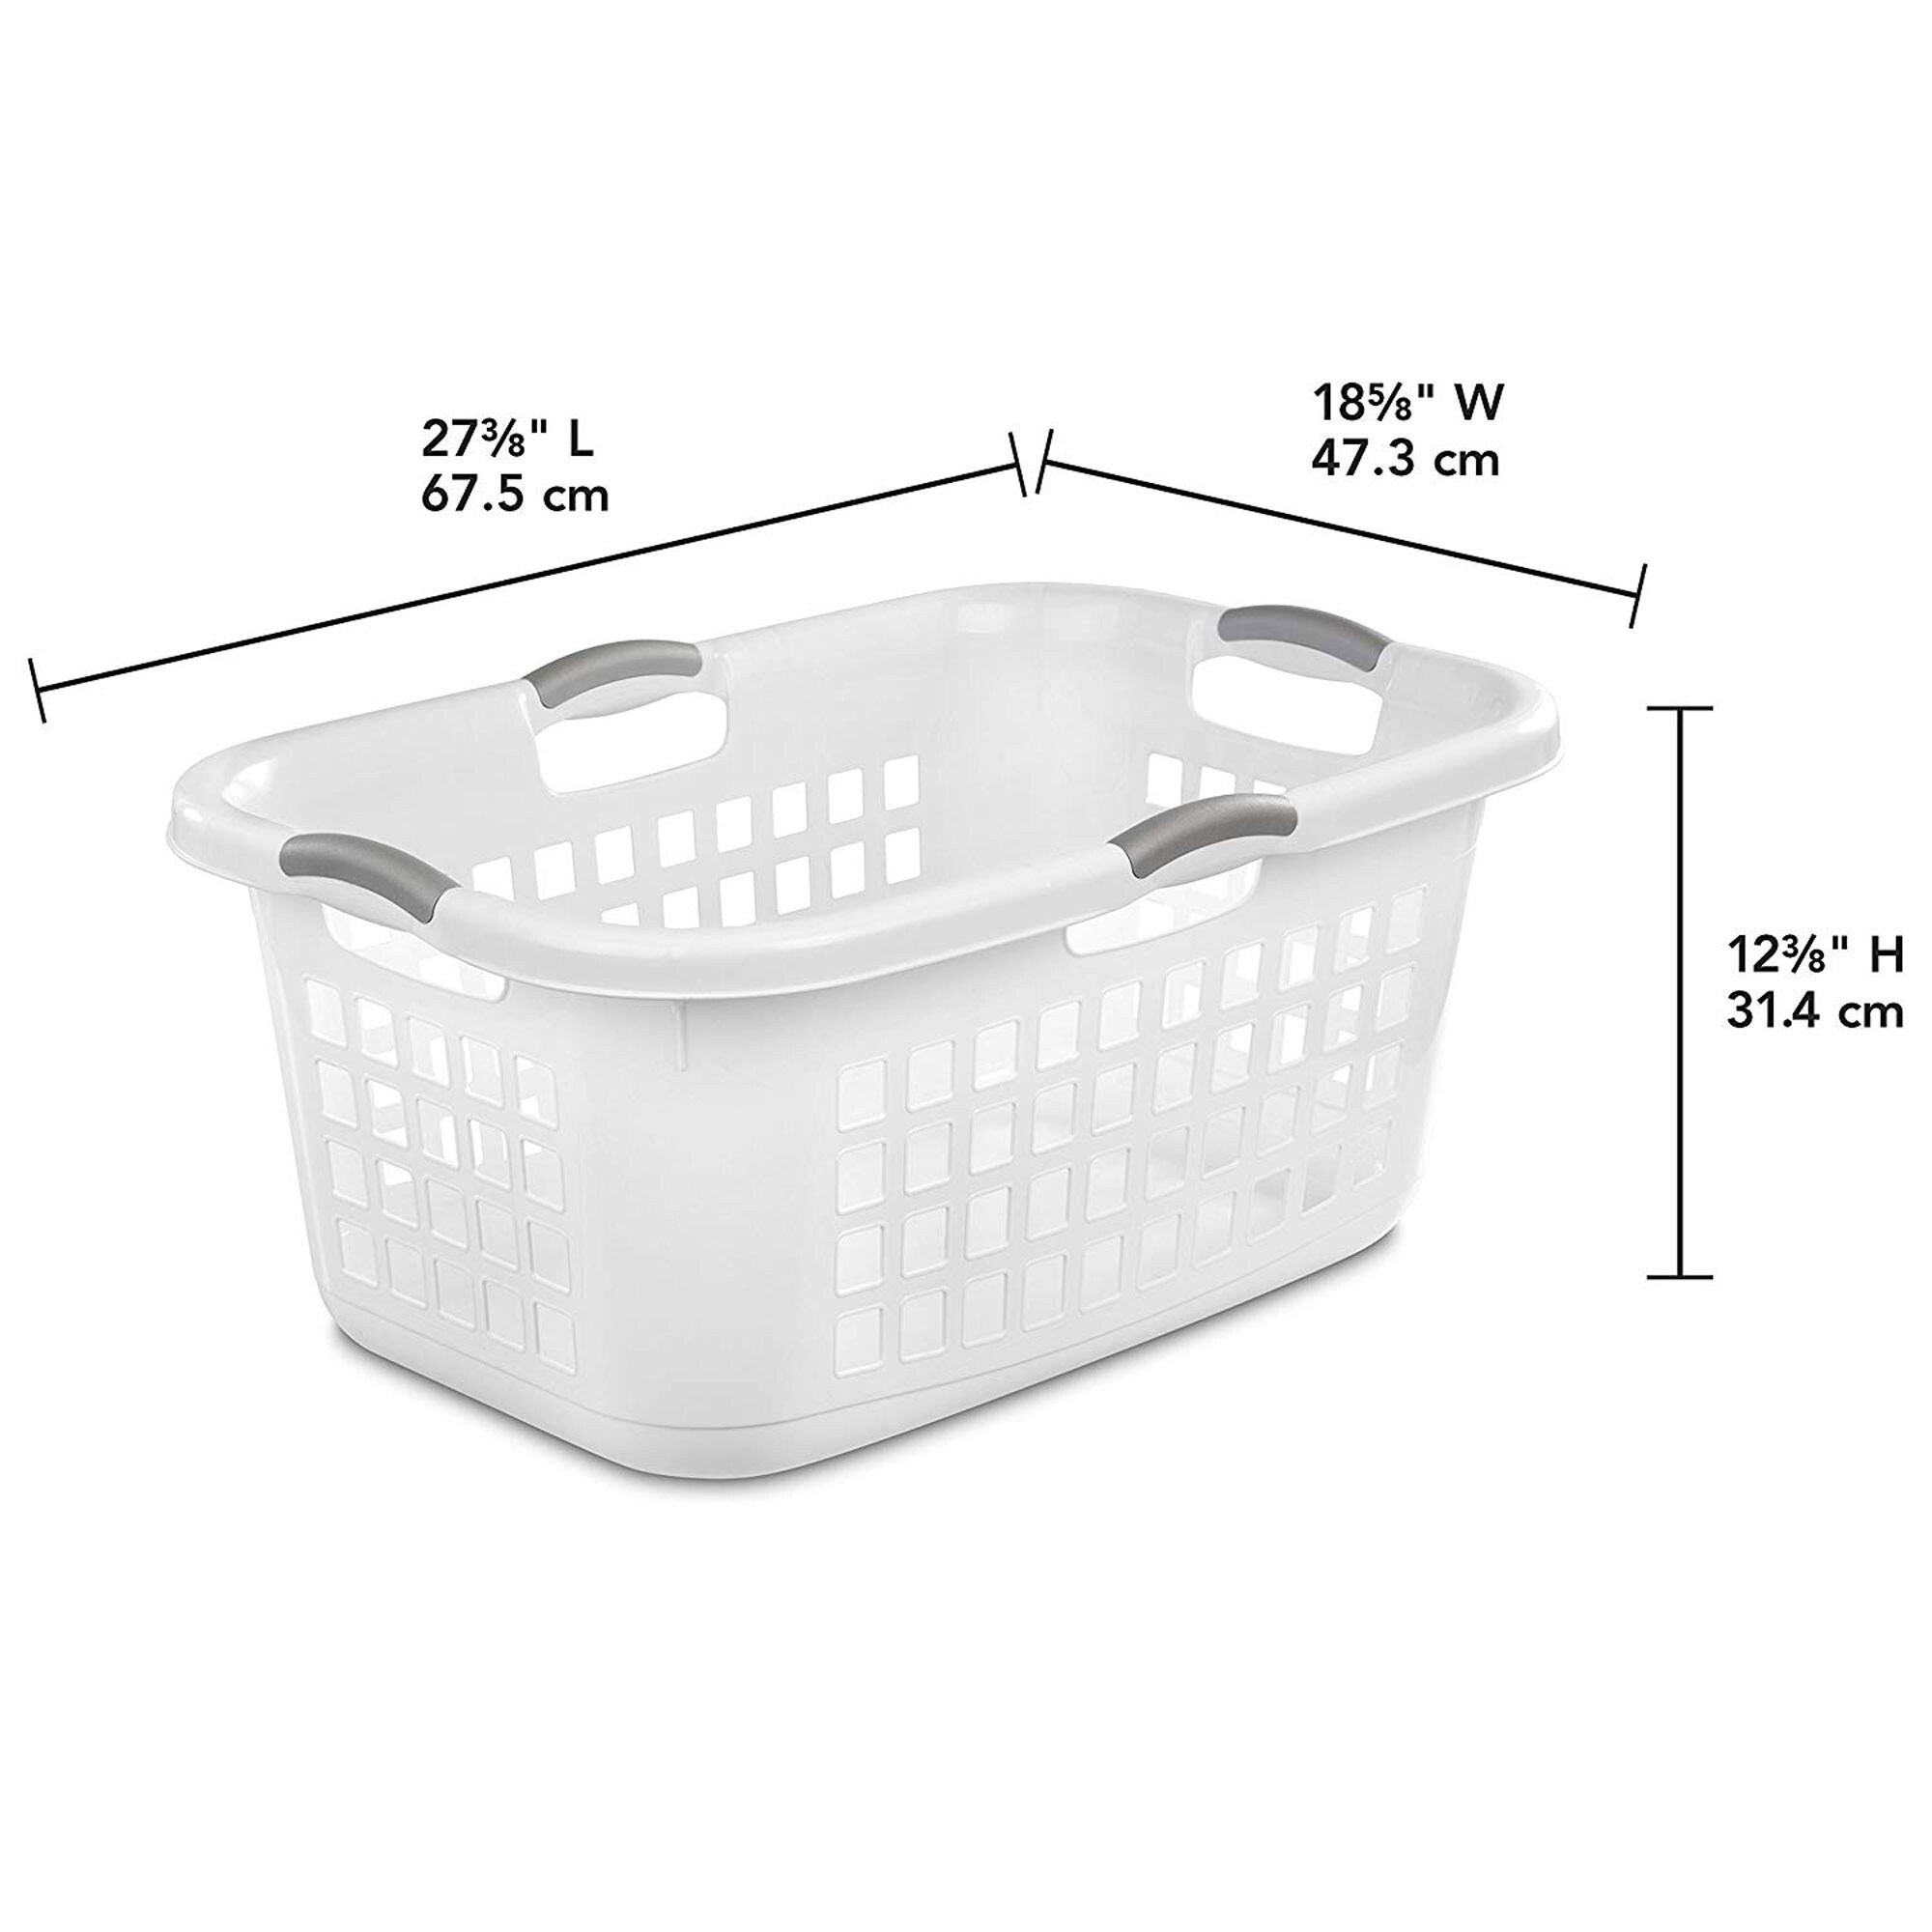 https://ak1.ostkcdn.com/images/products/is/images/direct/3c5f78c4d16bdaa61bf1de1ef3b5b30455f25c16/Sterilite-Ultra-2-Bushel-Plastic-Stackable-Laundry-Basket-Bin%2C-White-%2812-Pack%29.jpg